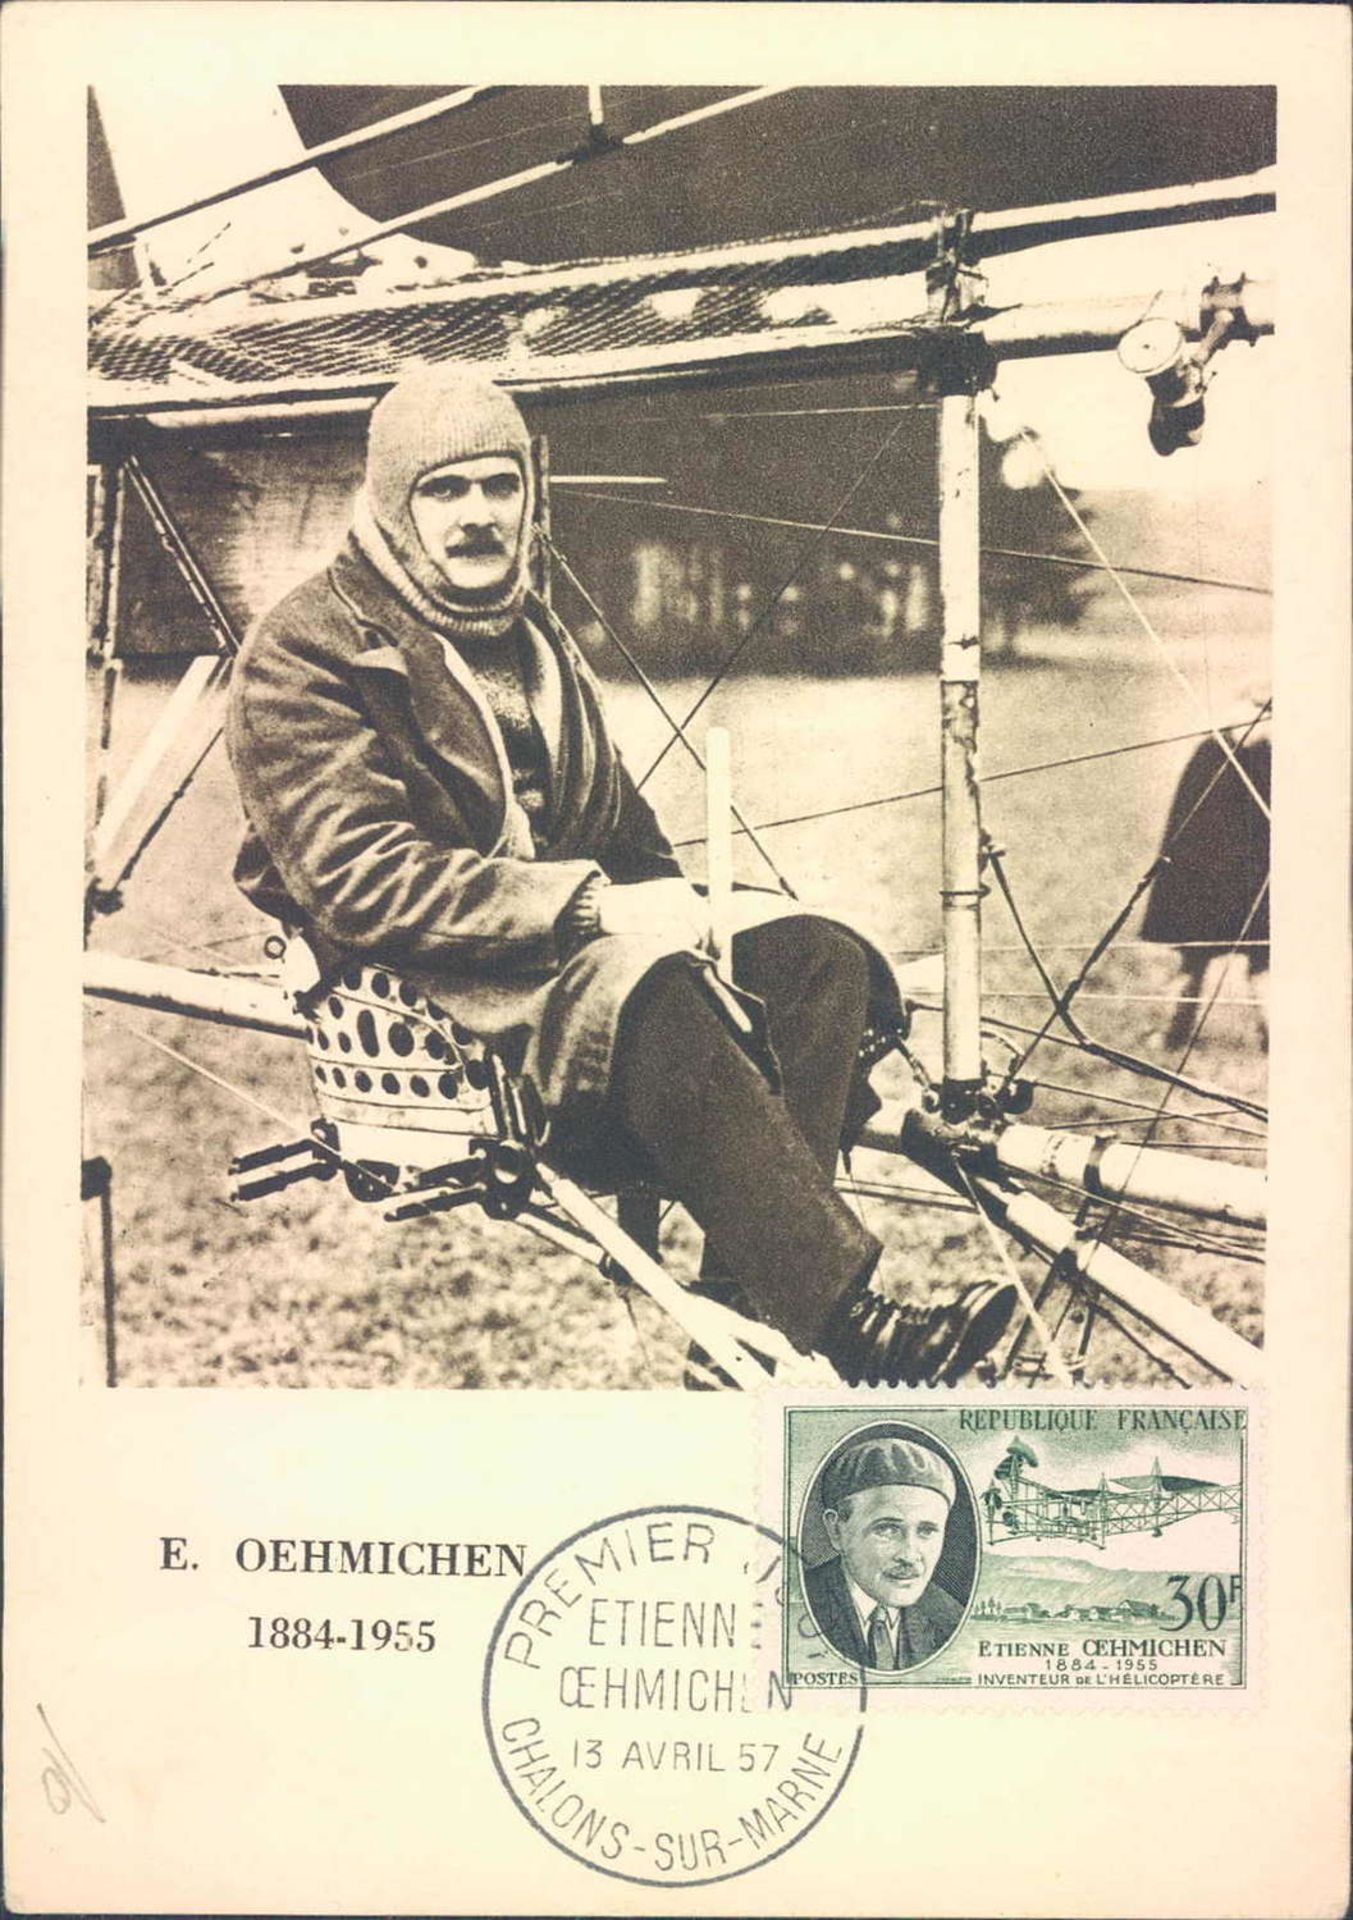 Ersttags - Brief Major James Cordes mit Lebenslauf und Postkarte E. Oehmich, franz. Helikopter - - Image 4 of 5